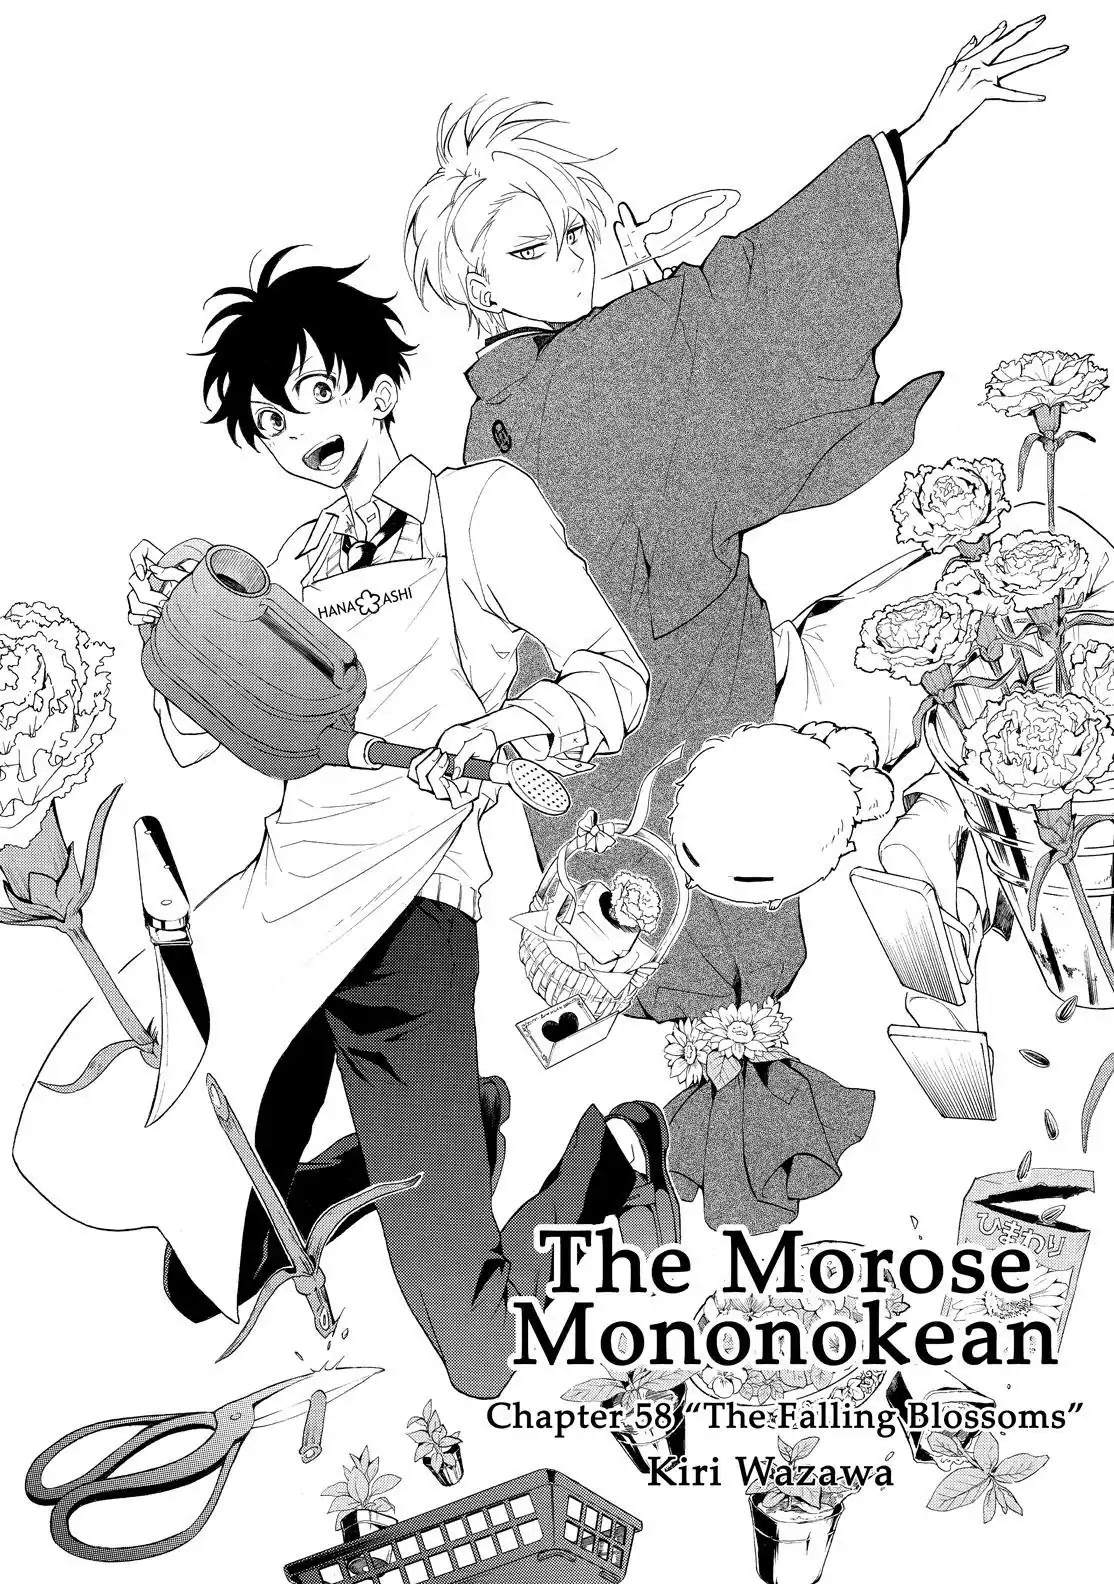 The Morose Mononokean Anime's 2nd Season Video Highlights Characters - News  - Anime News Network